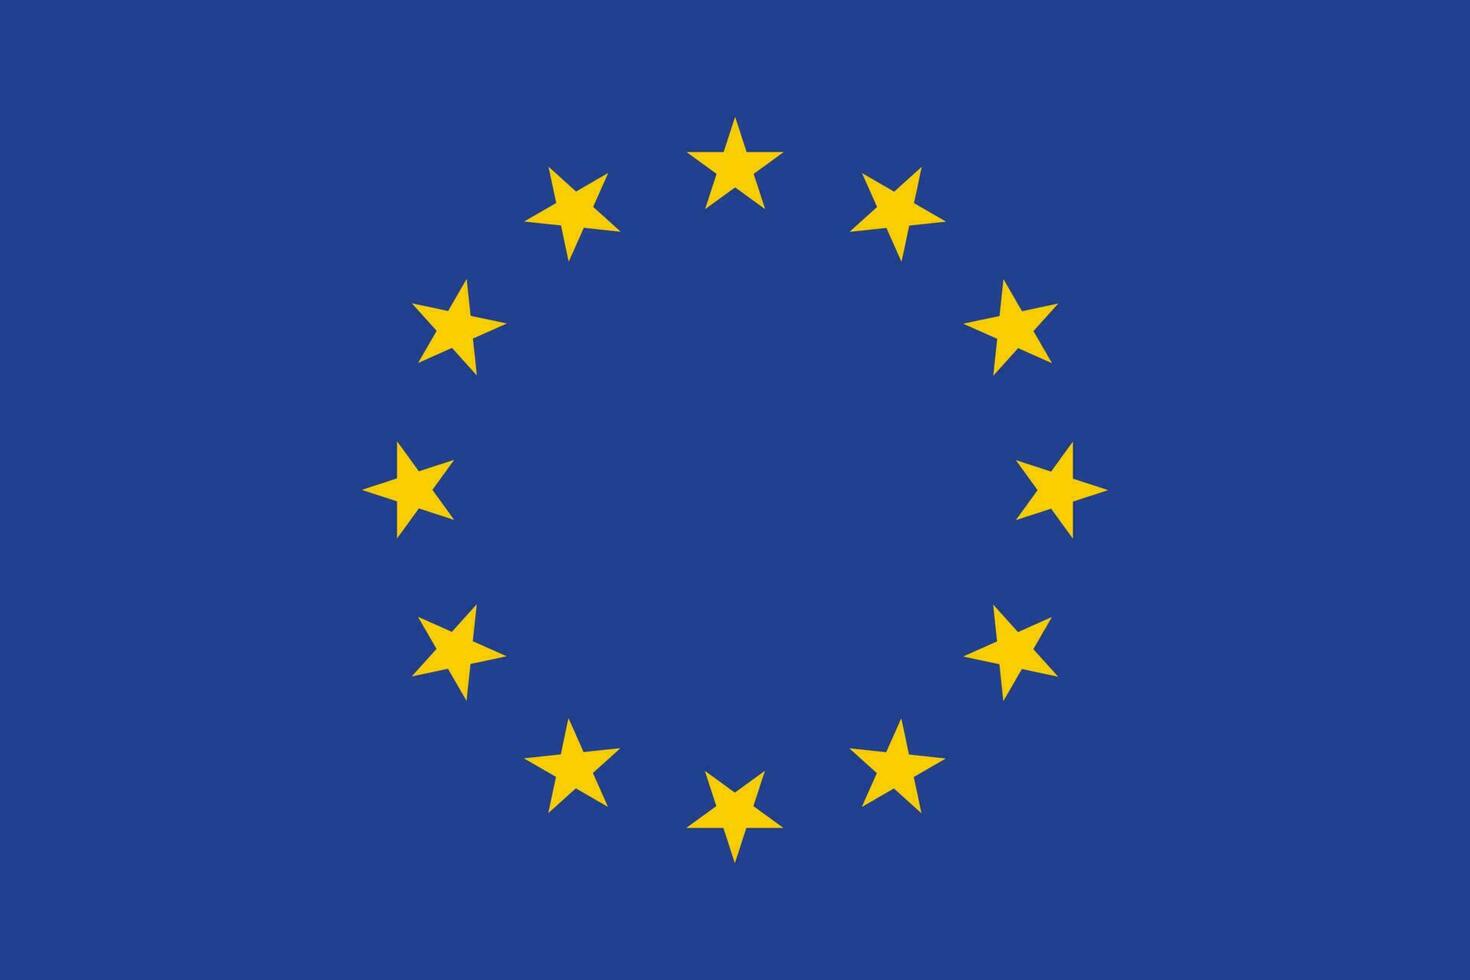 Flag of Europe. European Union. EU flag in design shape vector